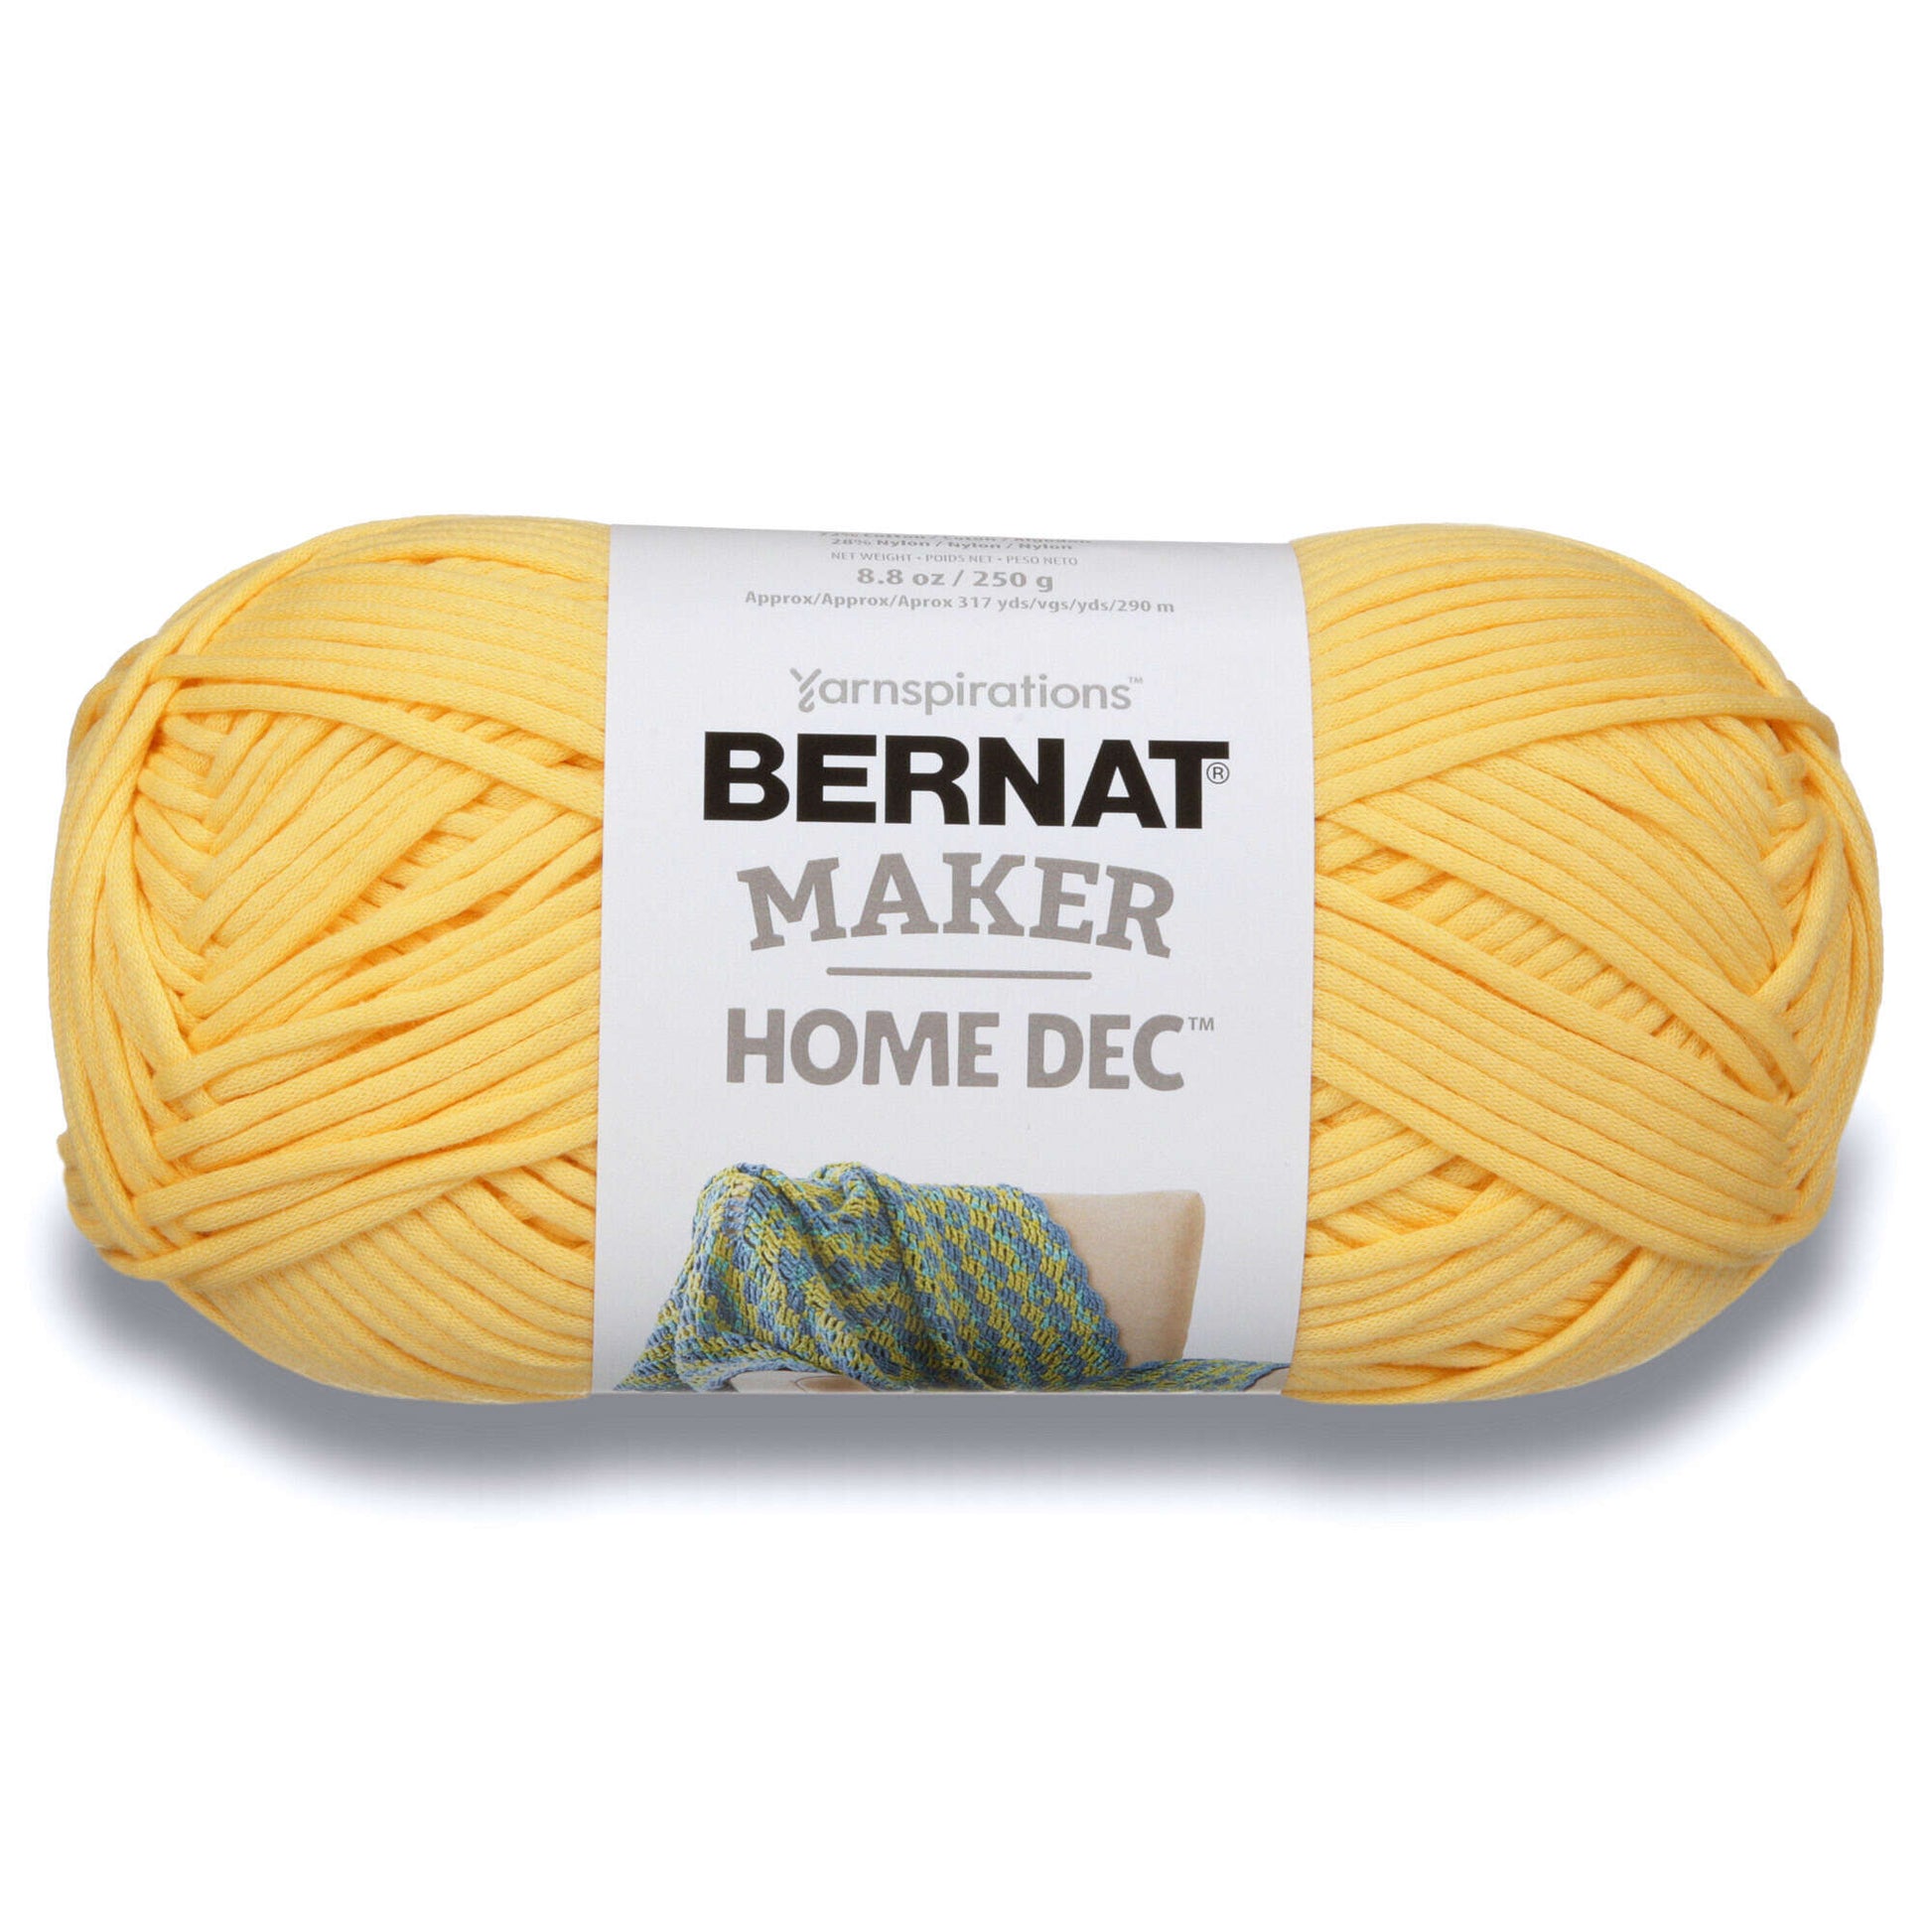 Bernat Maker Home Dec Yarn - Clearance Shades Gold